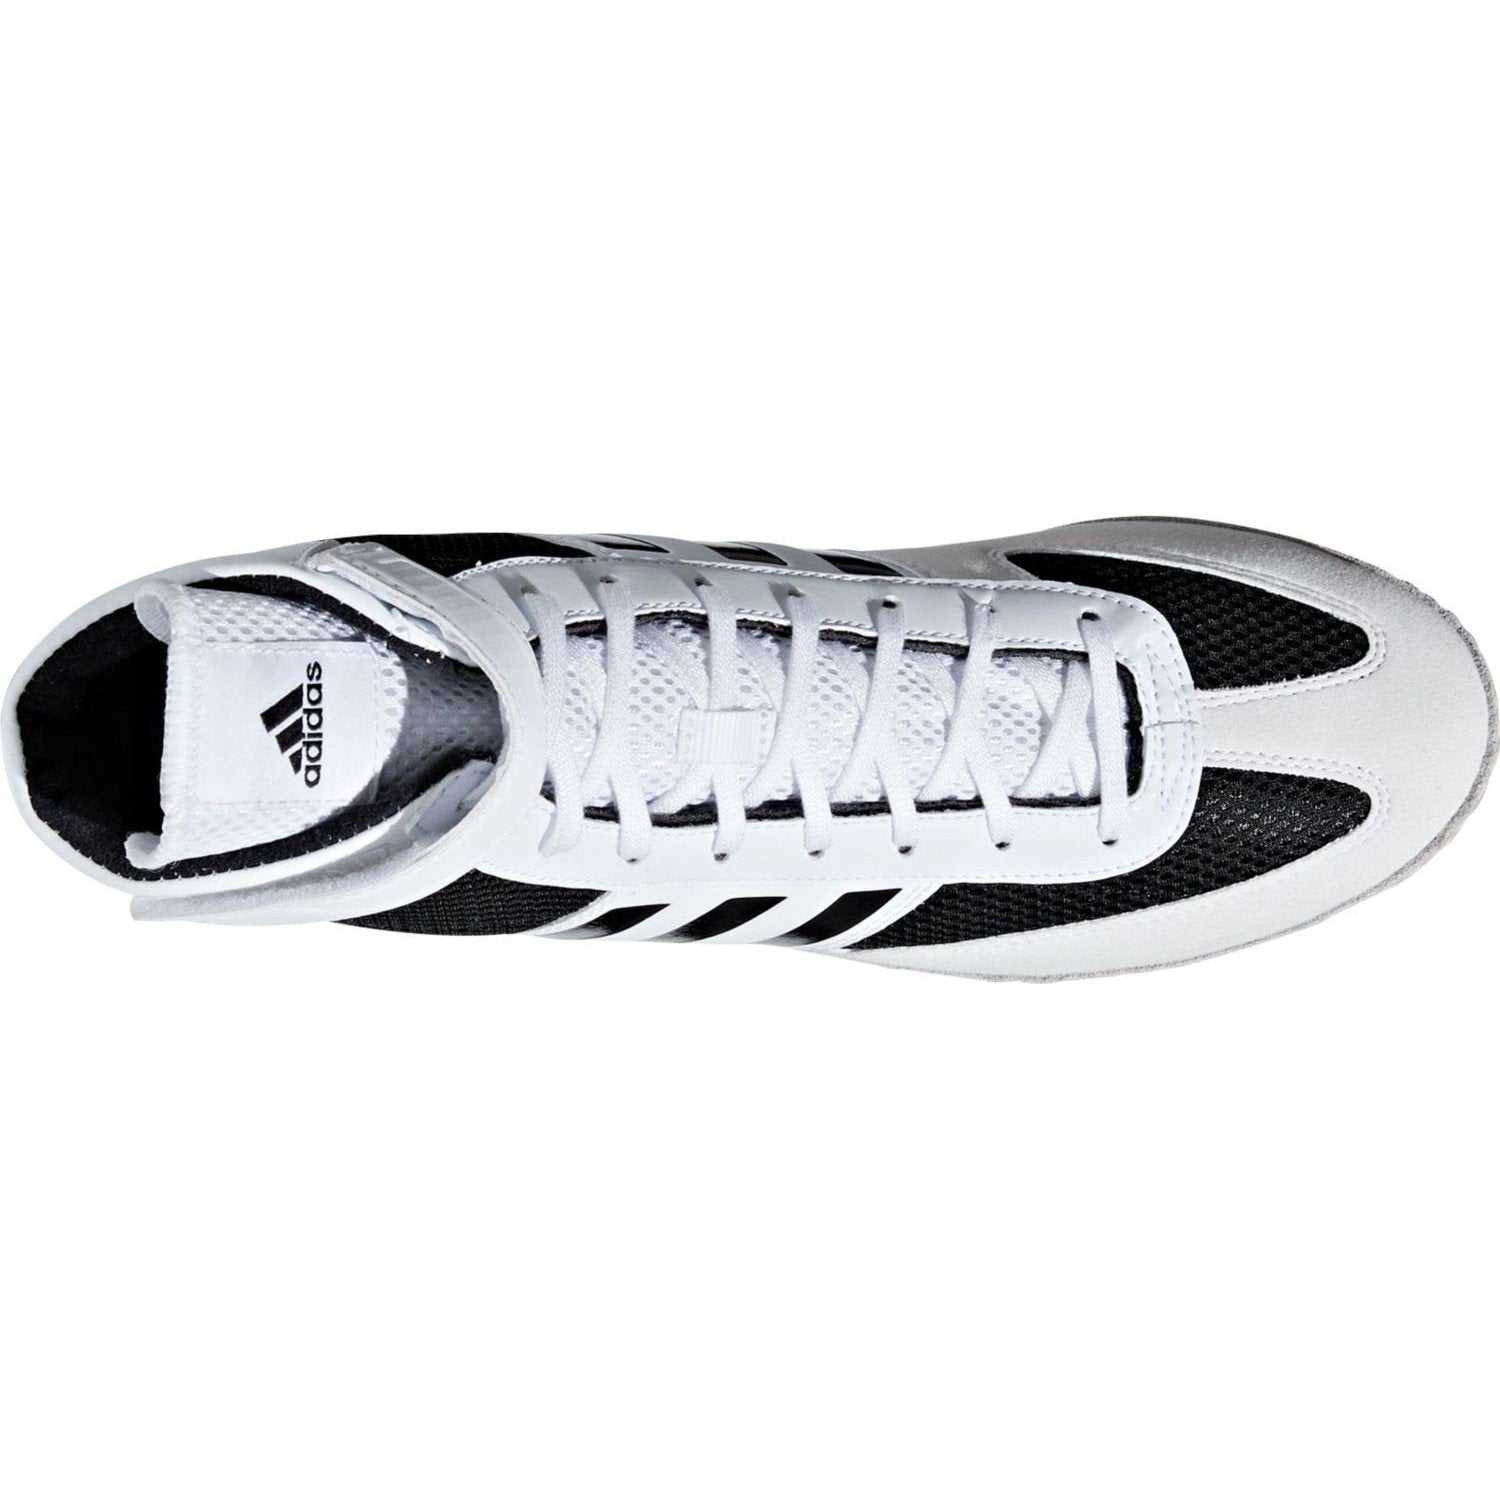 Adidas 223 adiZero Varner Wrestling Shoes - Black White Black